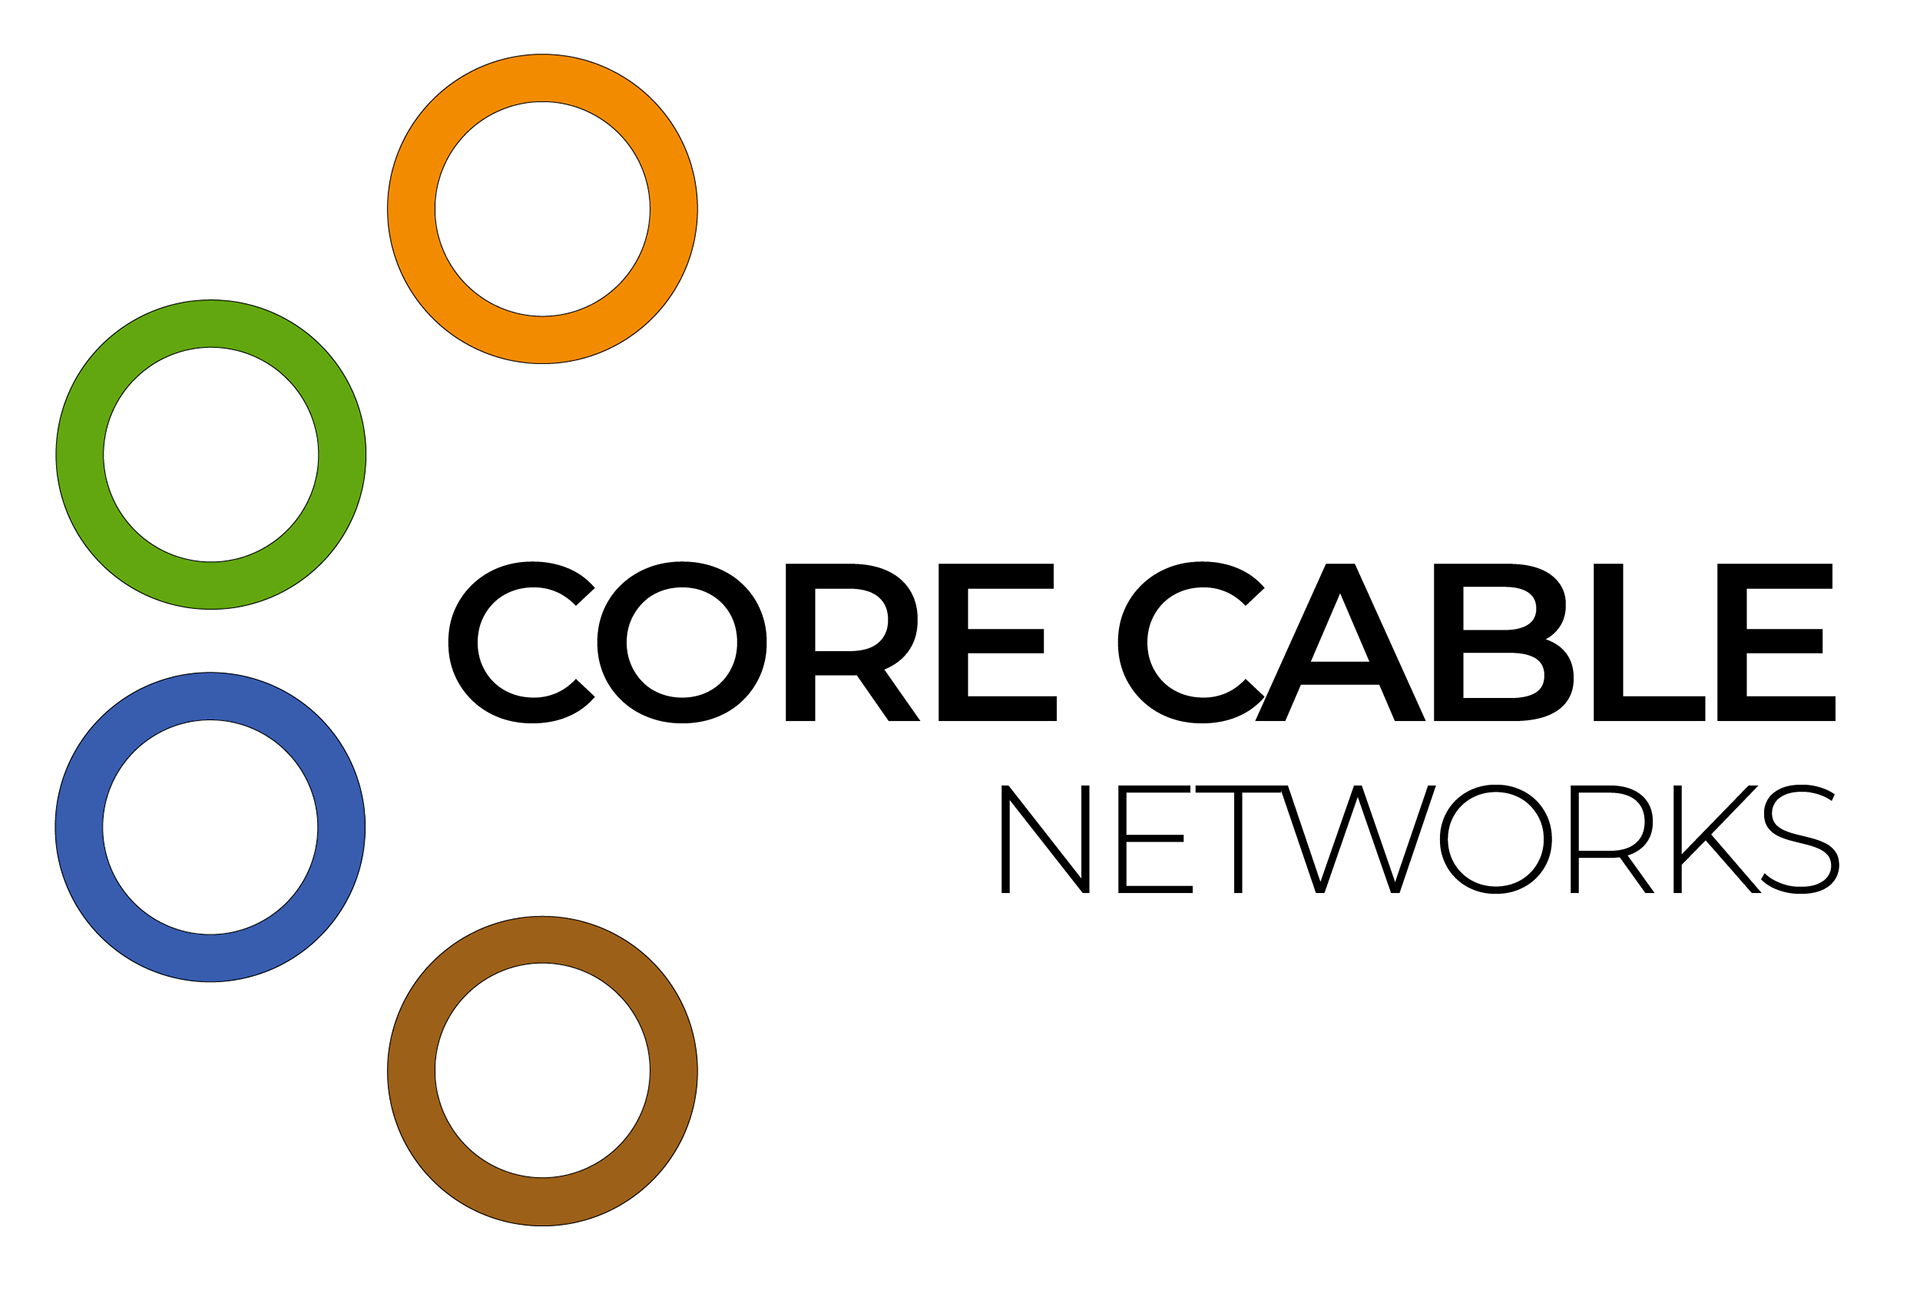 Core Cable Networks Ltd